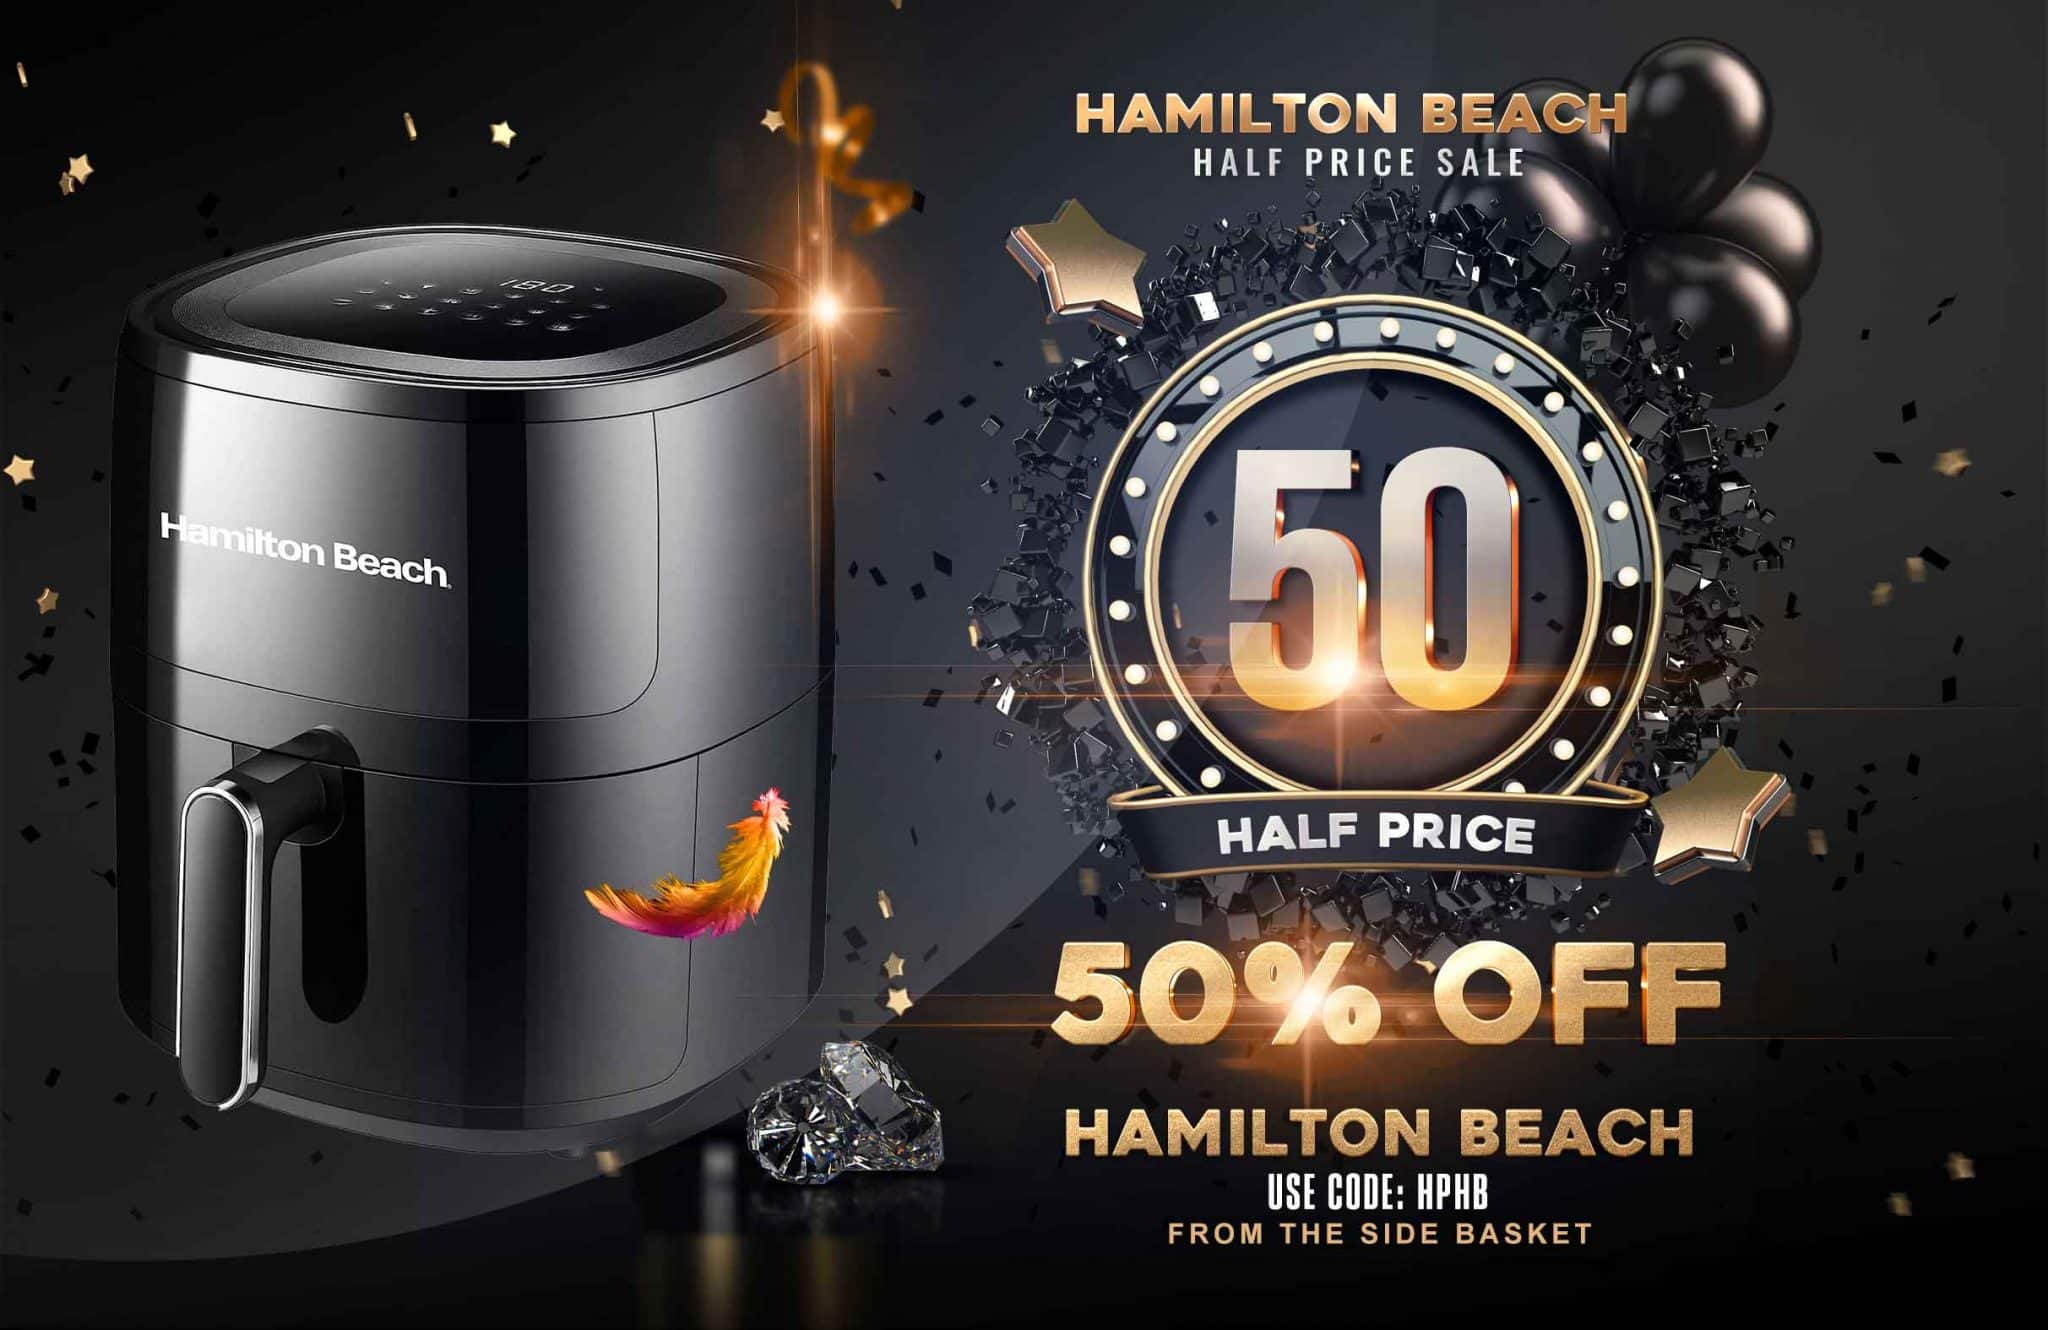 Featured image for “Half Price Hamilton Beach Sale”